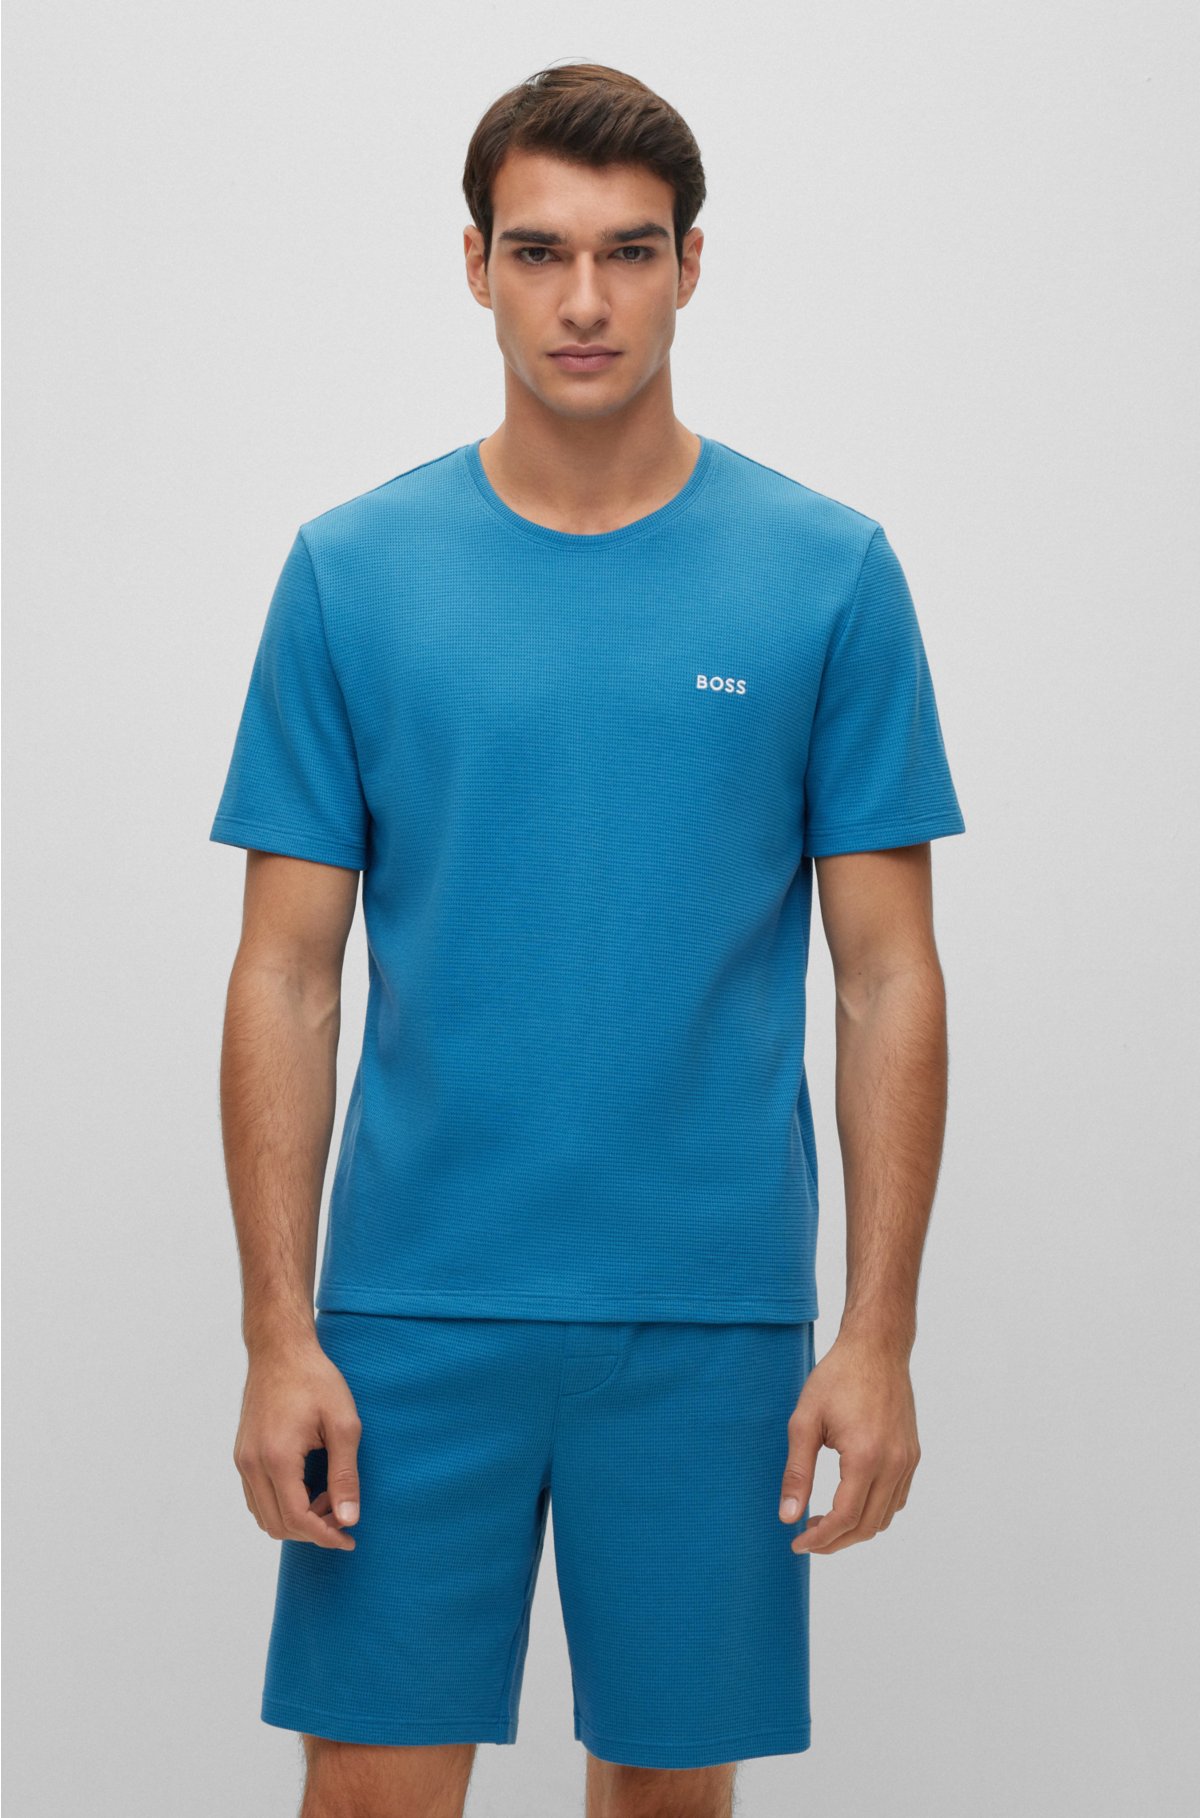 BOSS - Camiseta de mezcla de algodón logo bordado